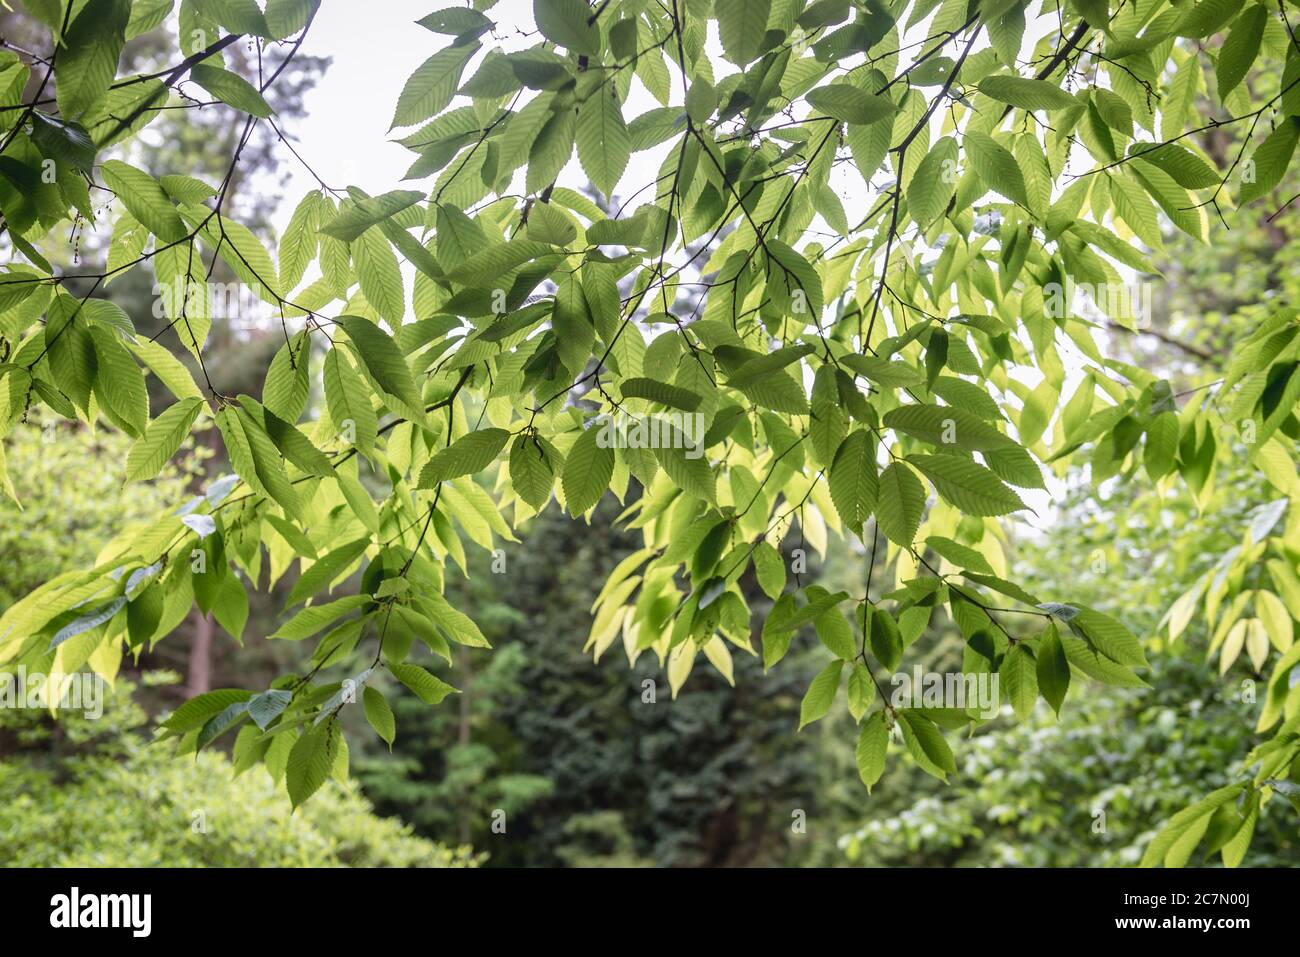 Acer carpinifolium tree leaves, common name hornbeam maple Stock Photo